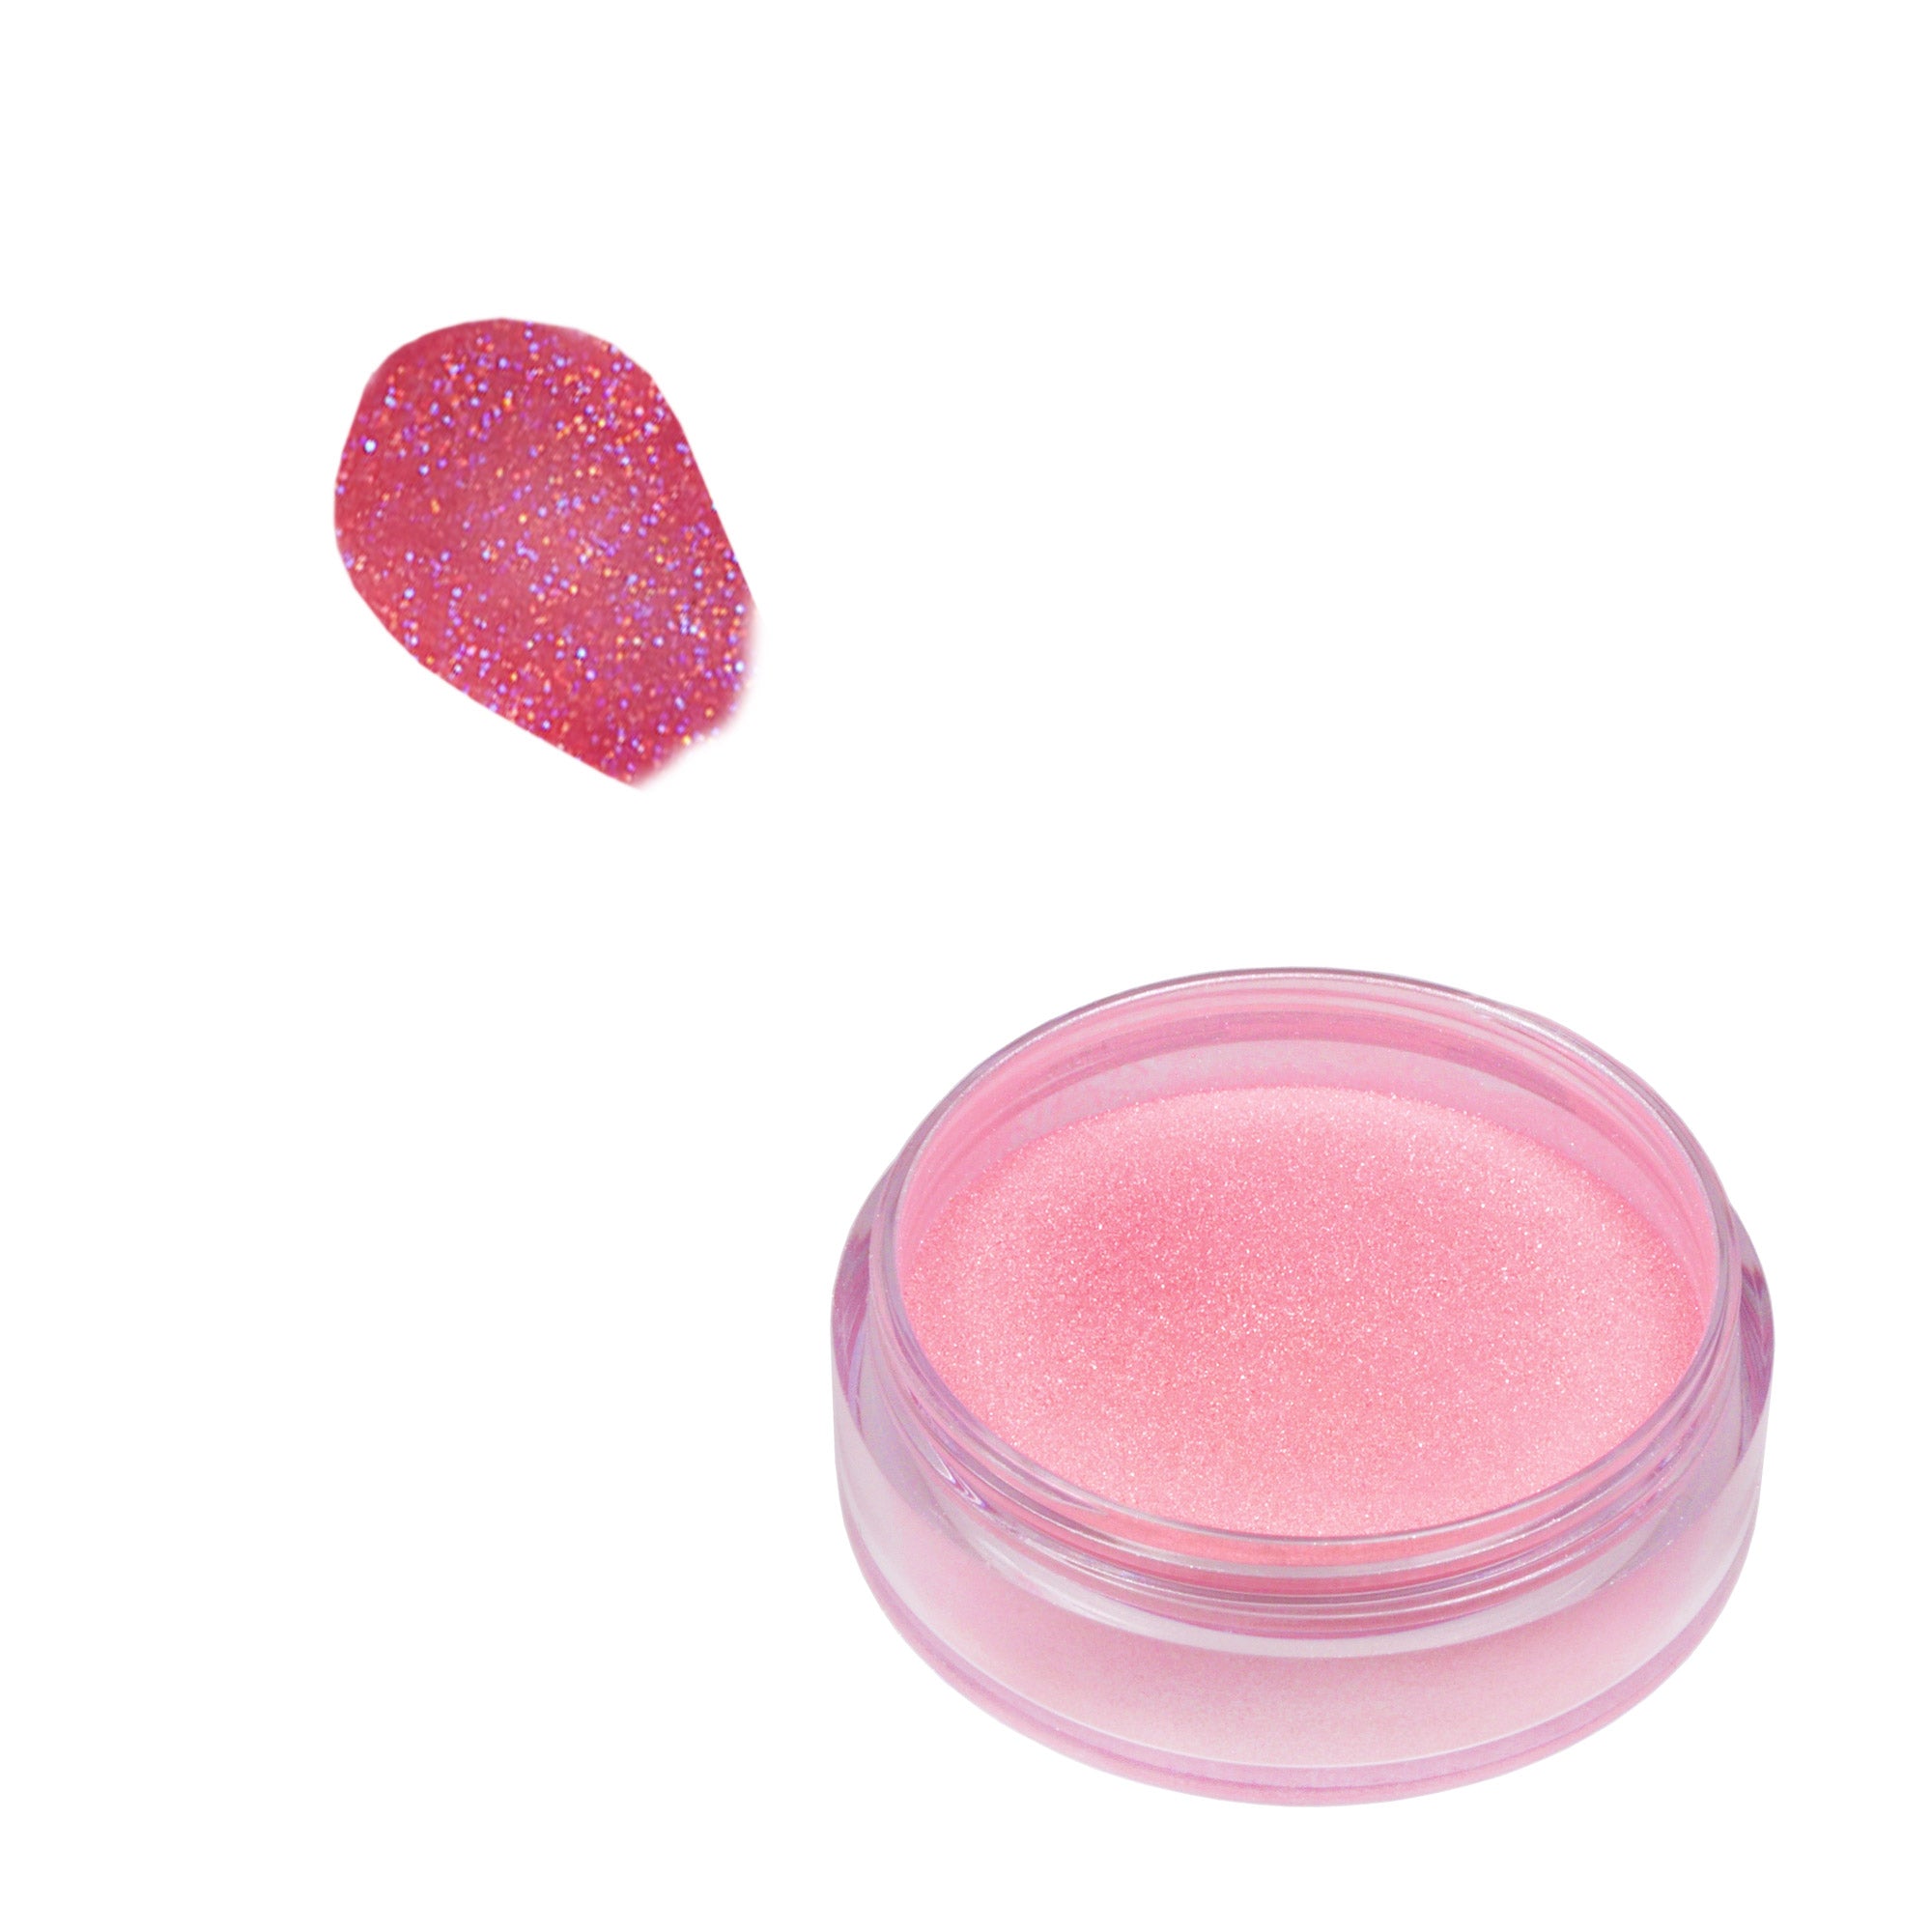 Acrylic Powder 10 g. - Purplish Red